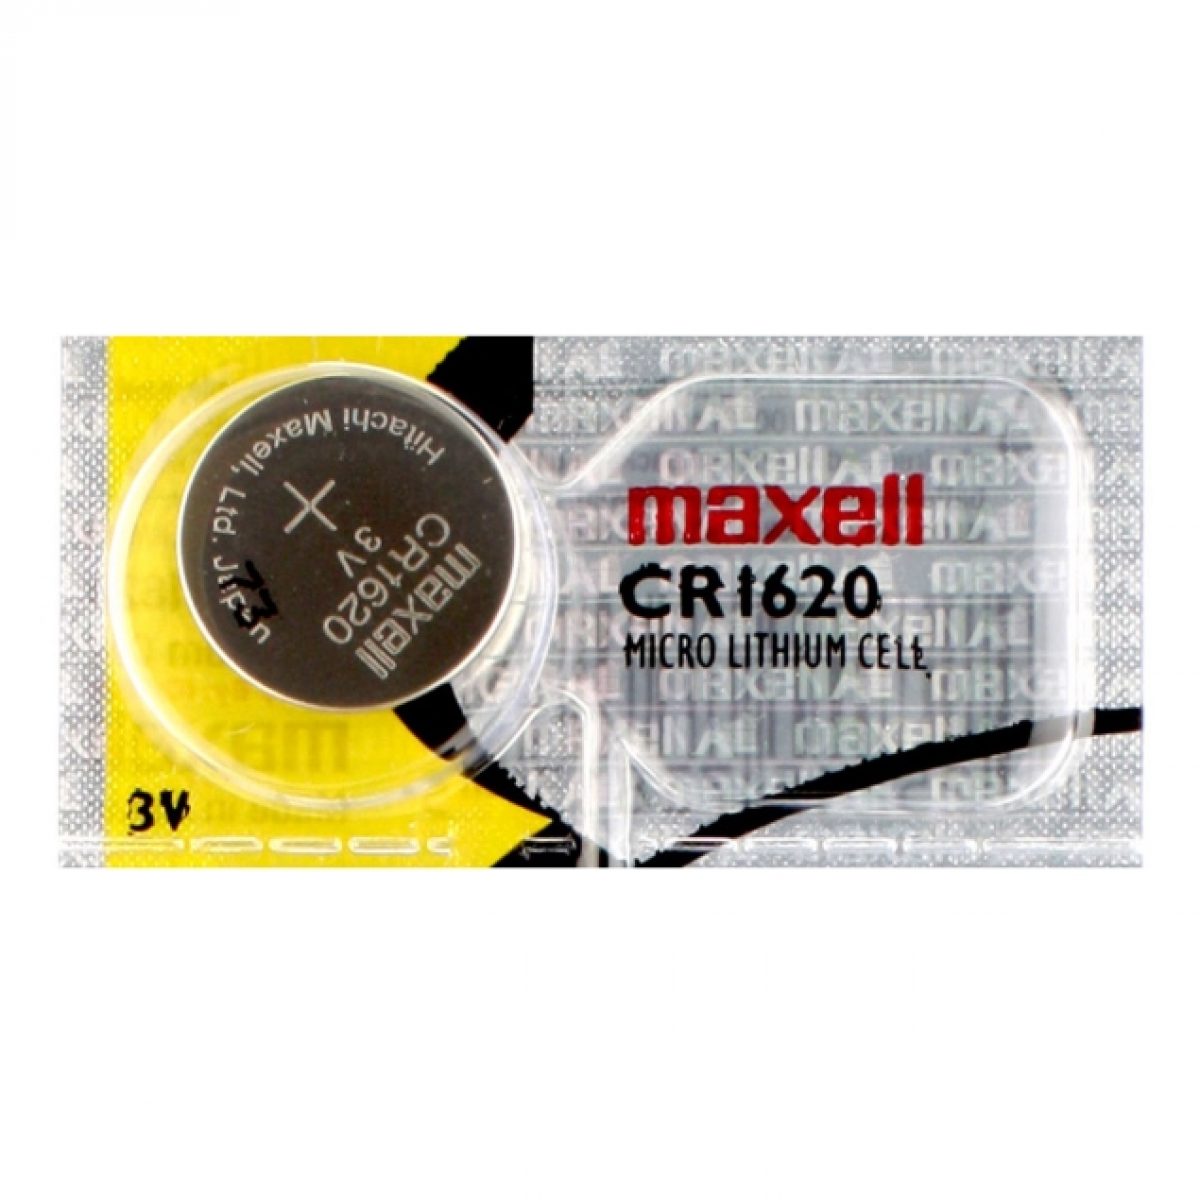  CELEWELL CR1620 5 Pack for Key Fob Tracker 70mAh 3V Lithium  Battery 【5-Year Warranty】 : Health & Household